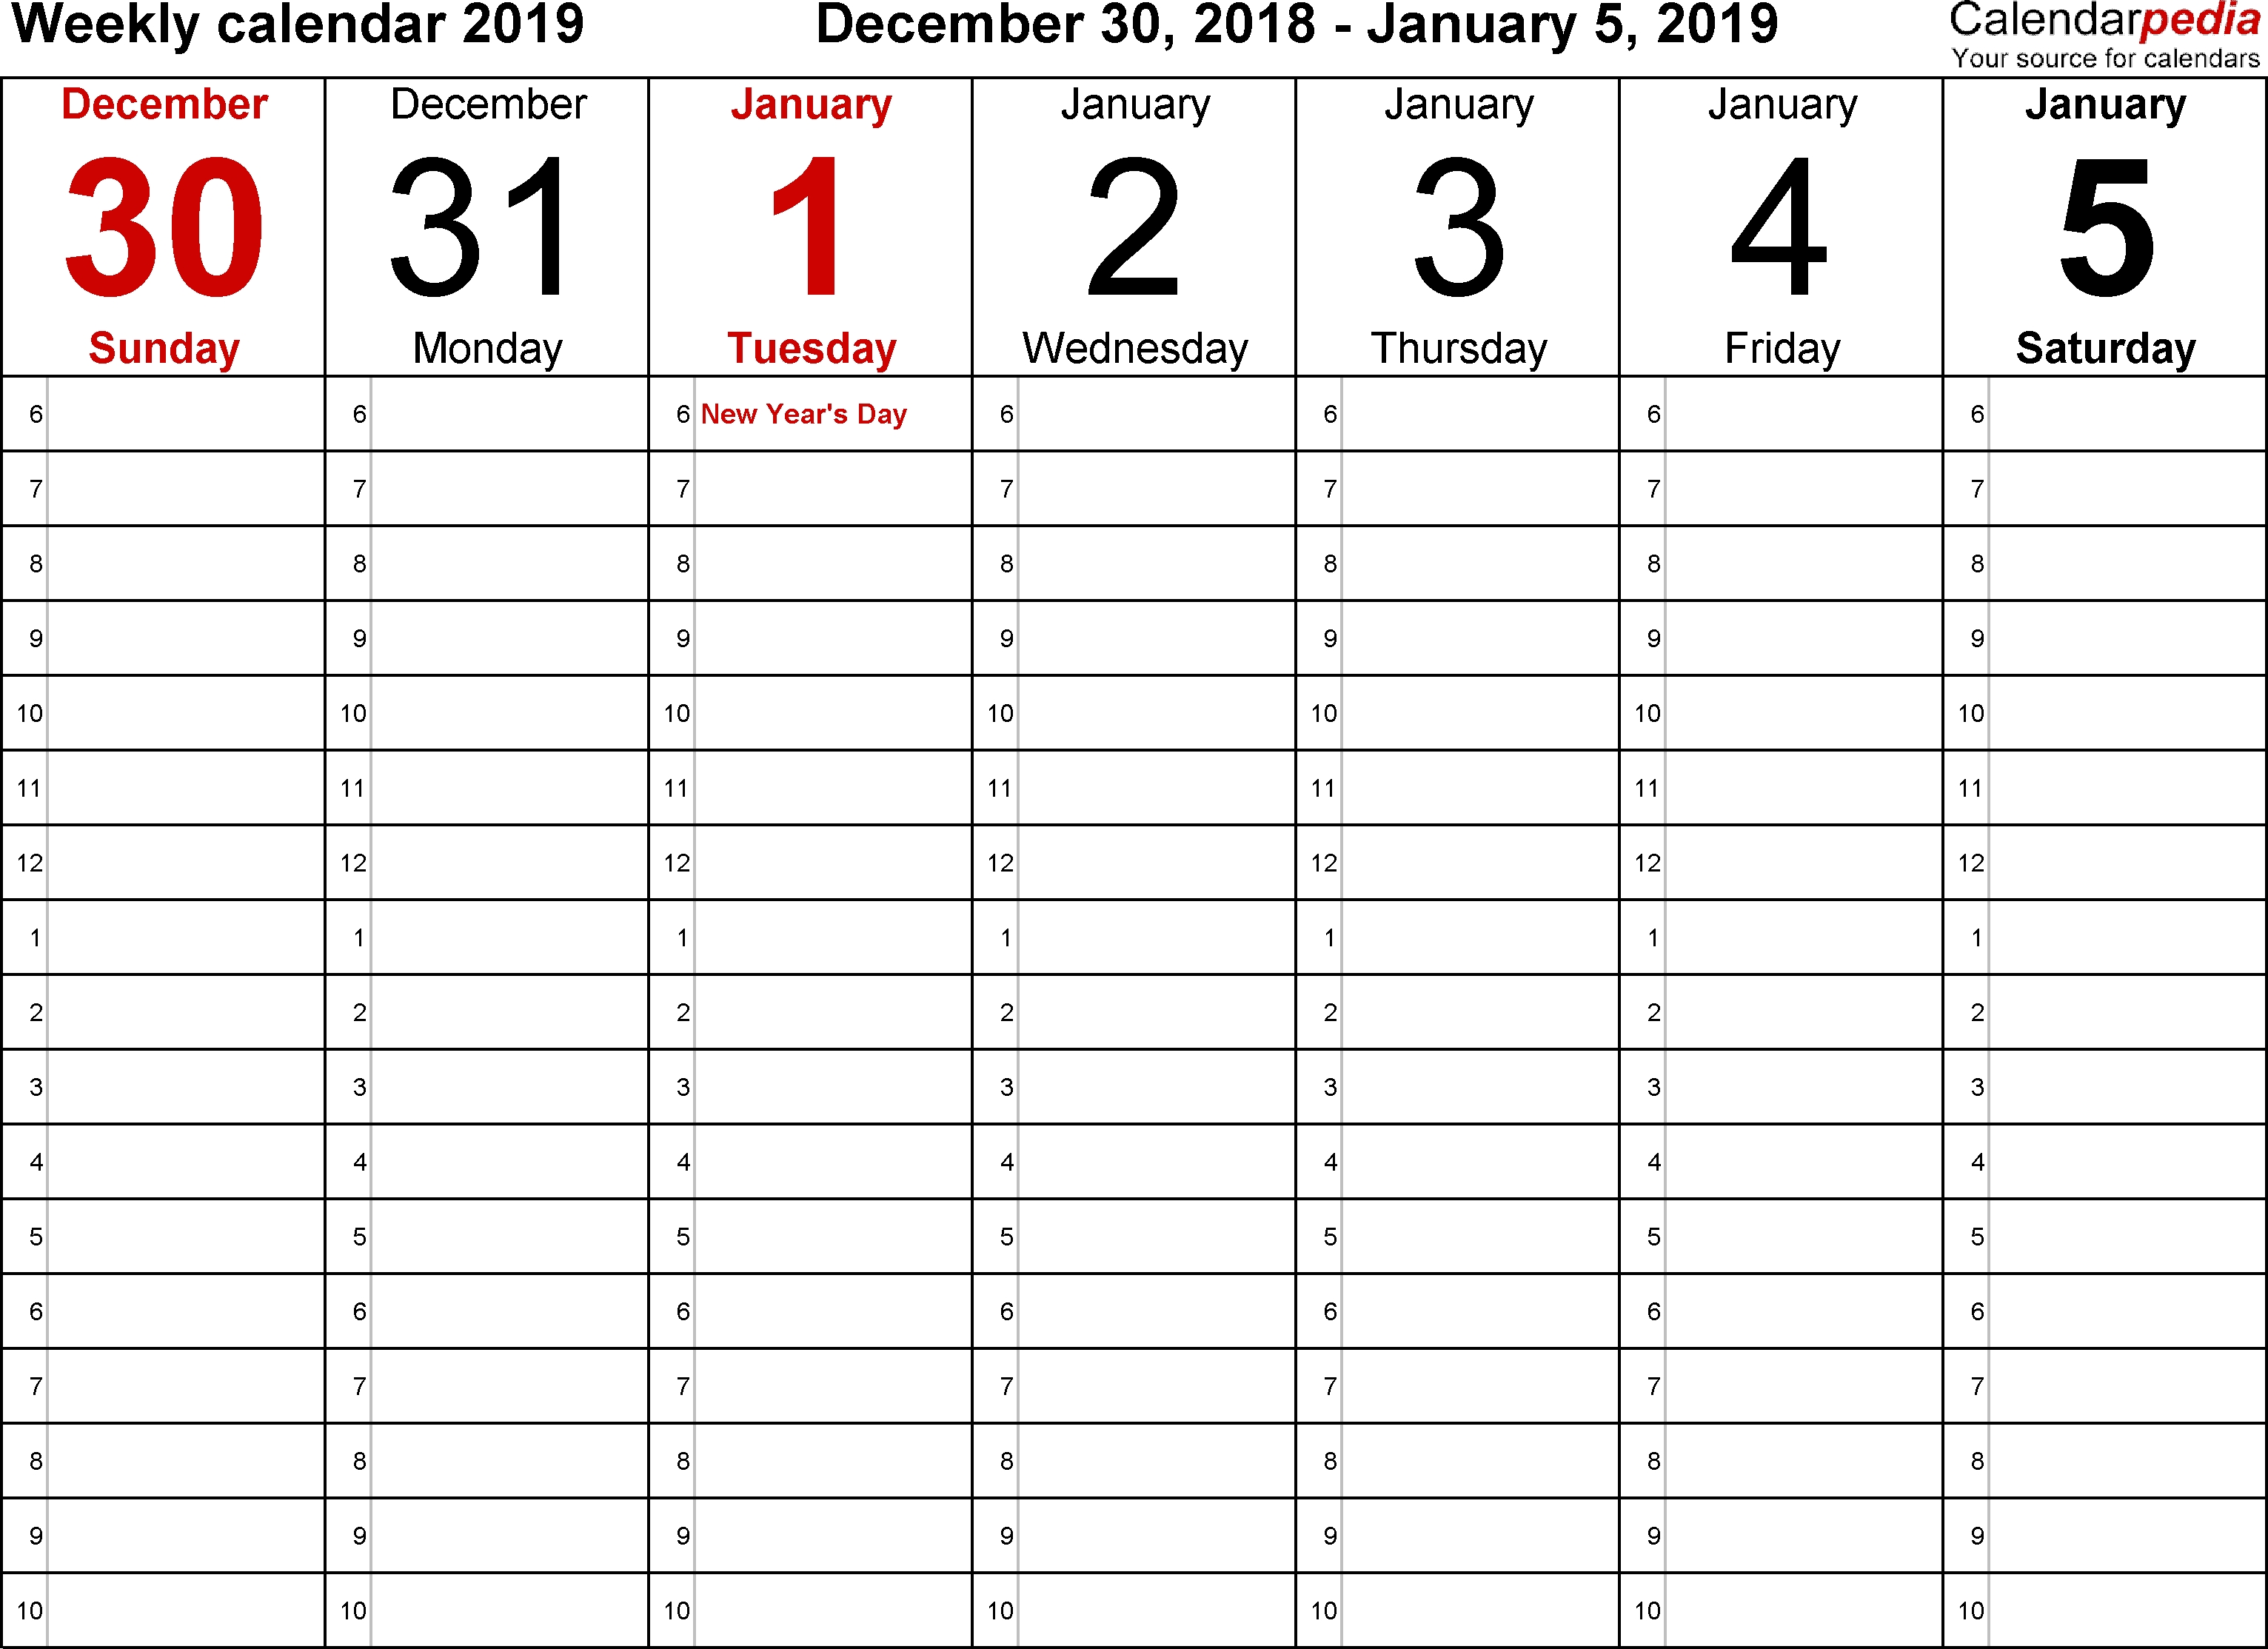 Weekly Calendar 2019 For Word - 12 Free Printable Templates within Calendar By Week With Printable